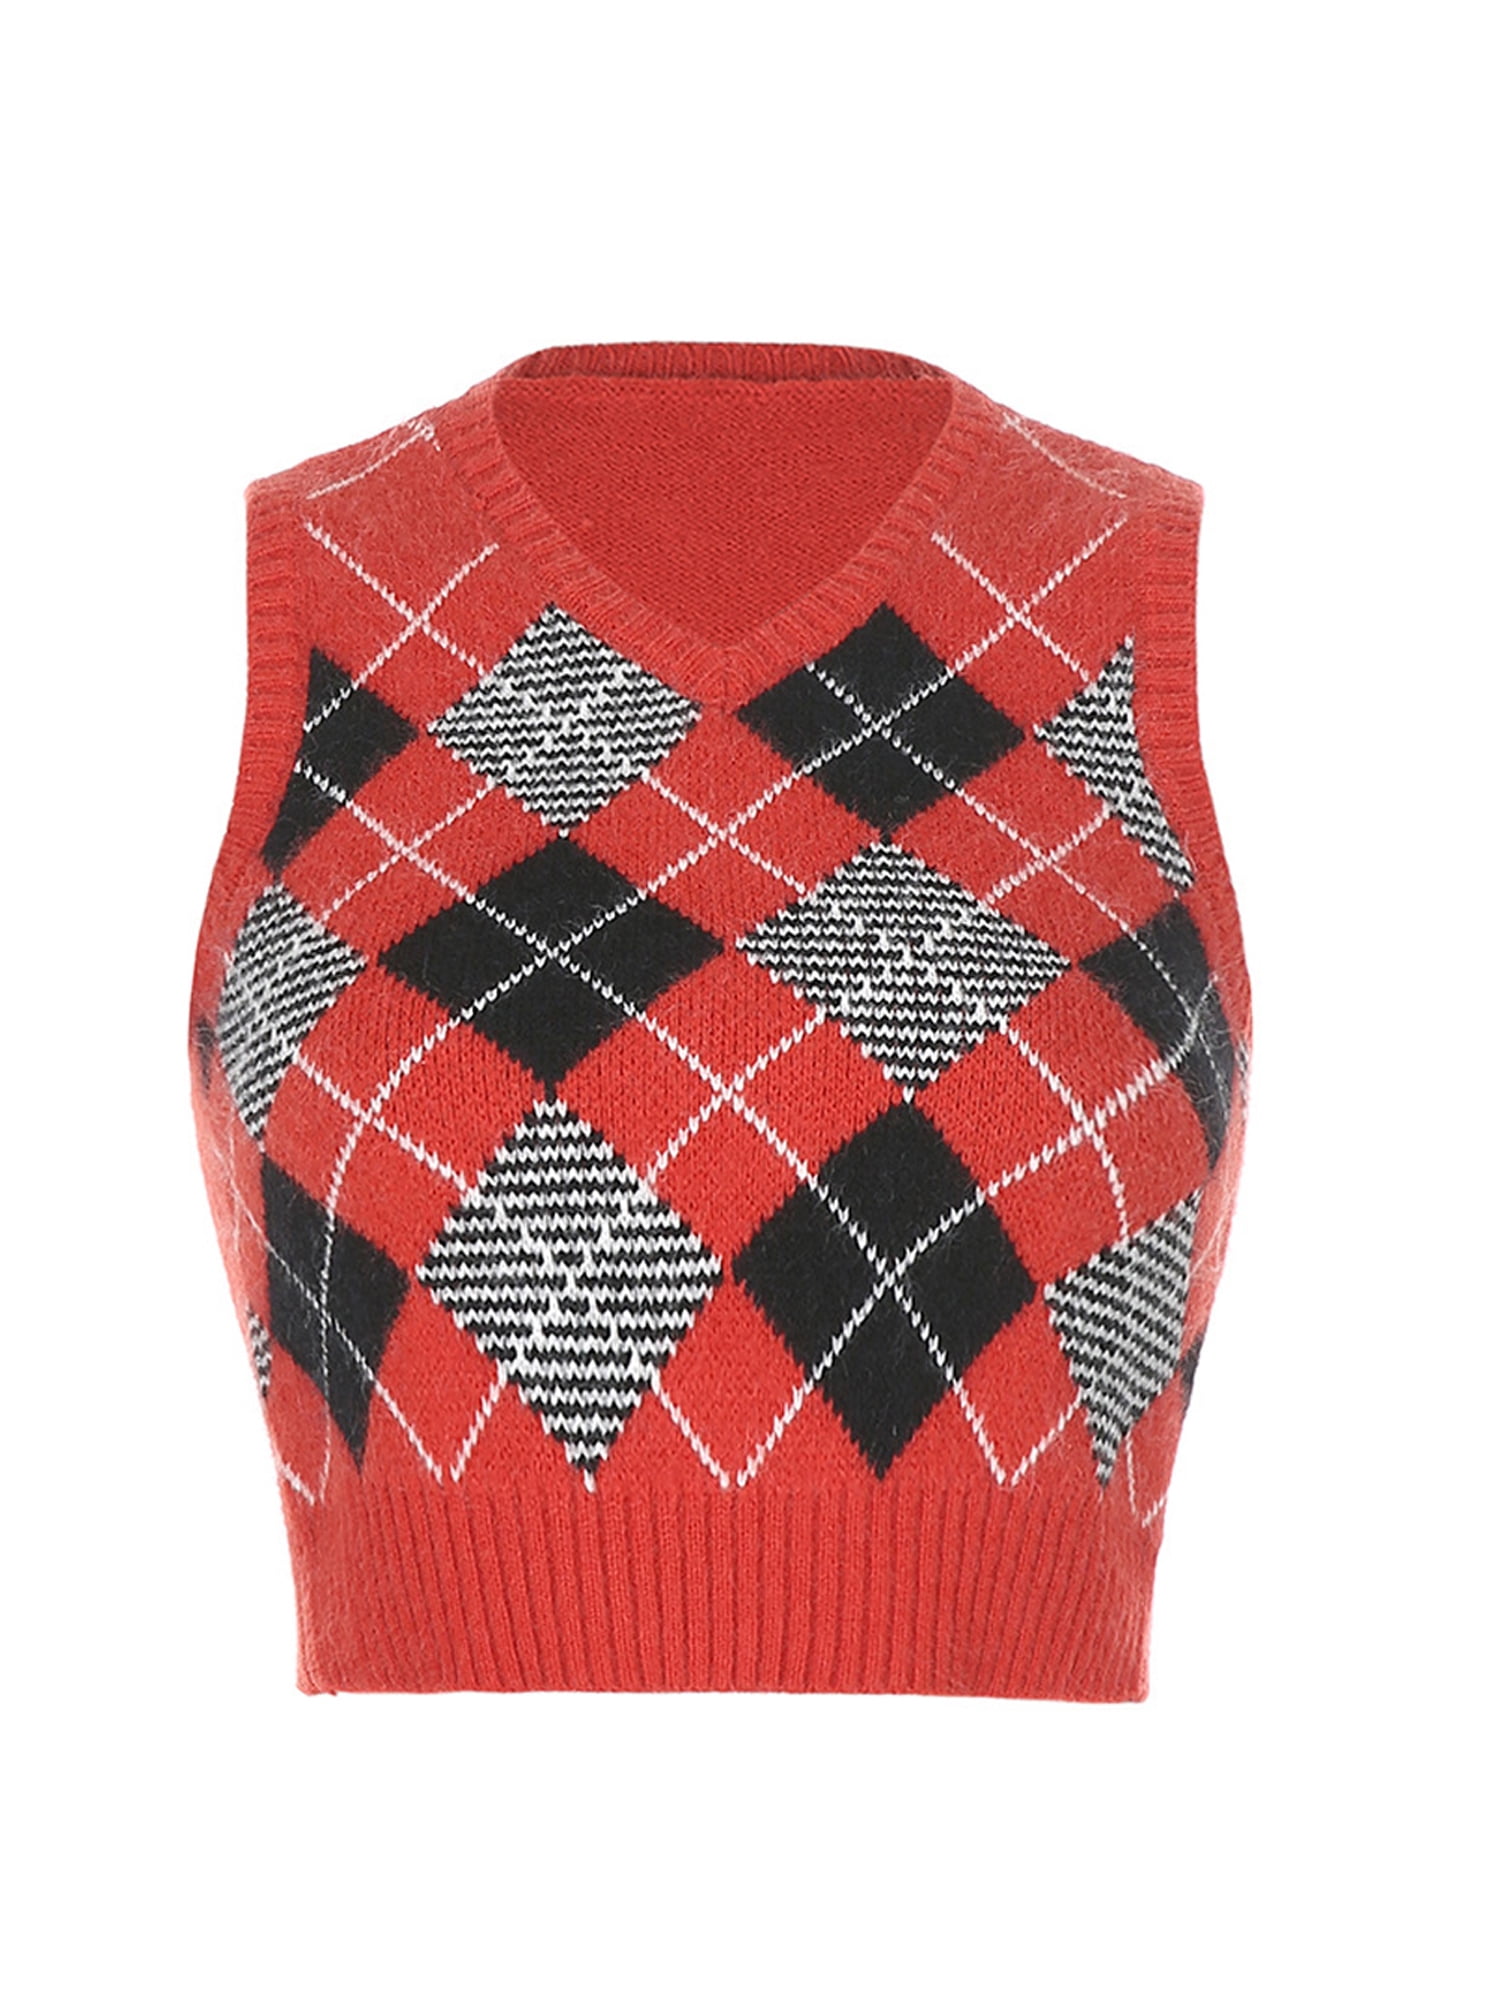 SLSKY Women Sweater Vest Autumn Stylish Vintage Geometric Argyle V Neck Sleeveless Pullovers Knitted Woman Sweaters